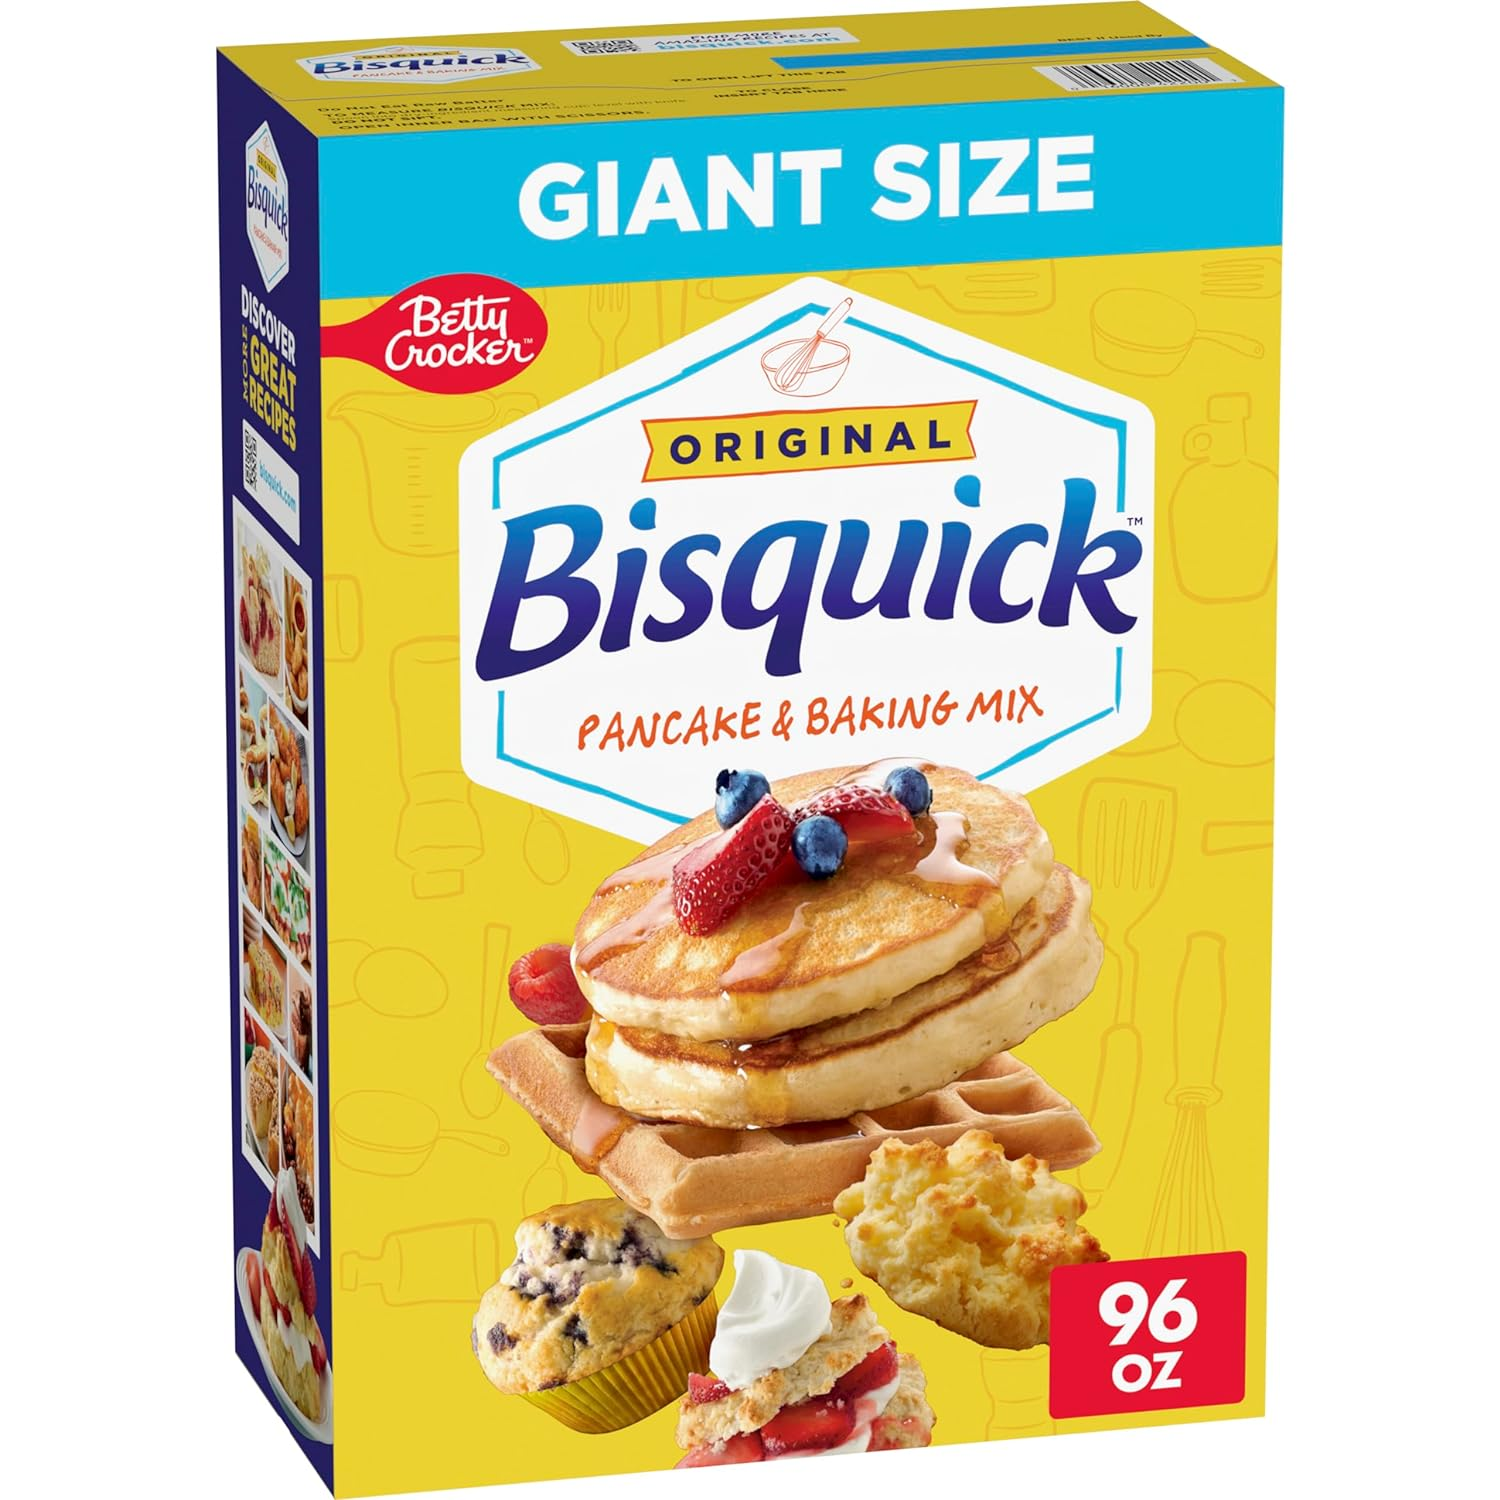 Betty Crocker Bisquick Original Pancake & Baking Mix, Giant Size, 96 oz $5.05